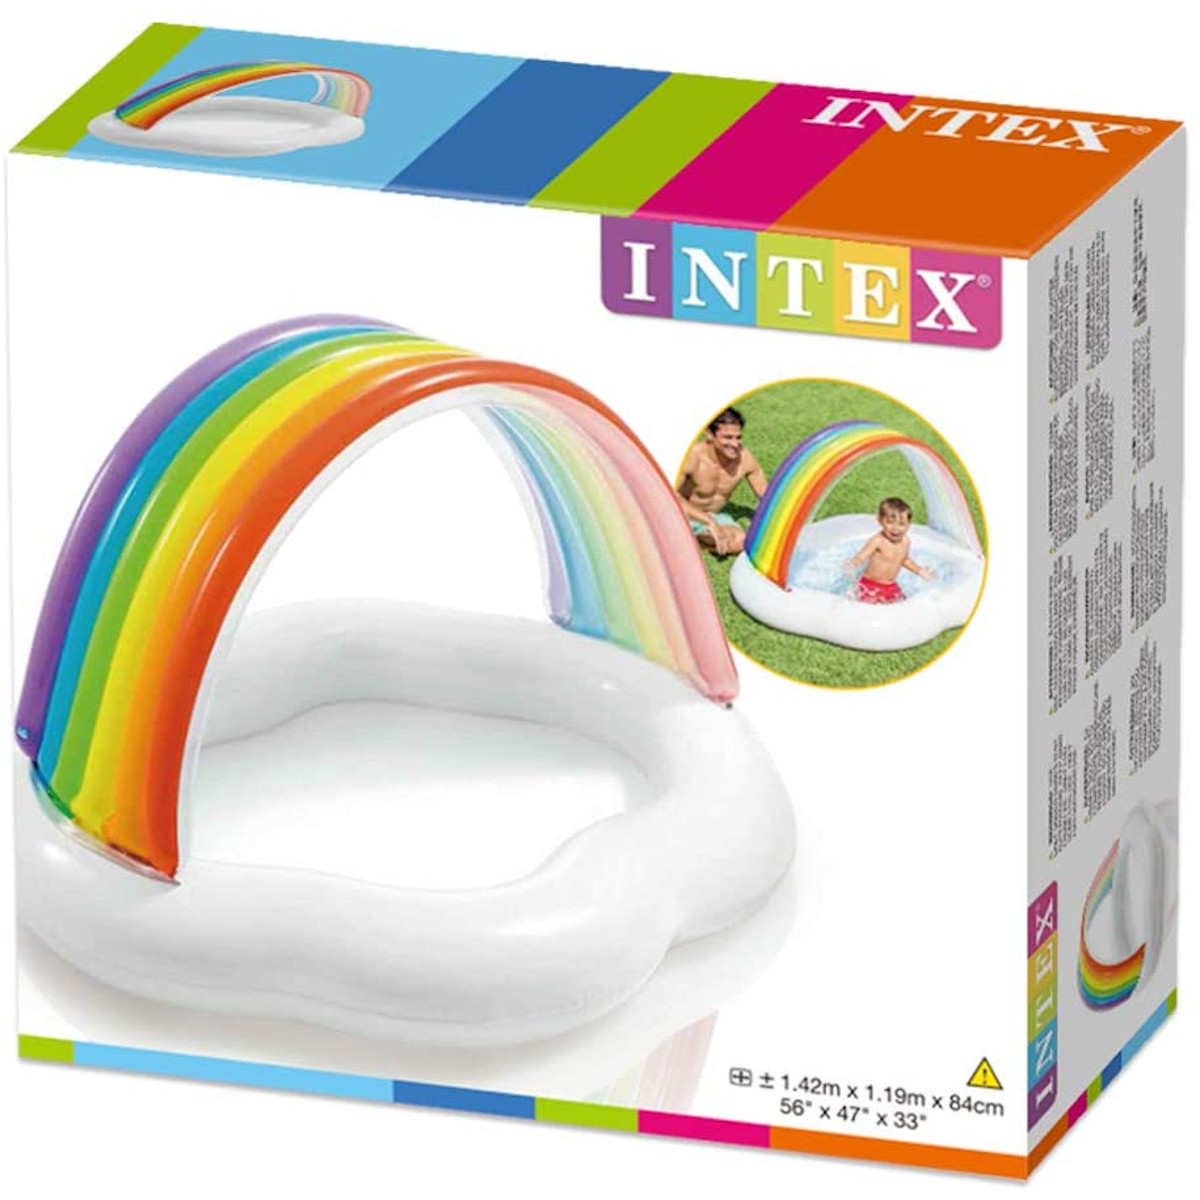 INTEX Baby Pool - Rainbow Cloud (142x119x84cm) Planschbecken, mehrfarbig